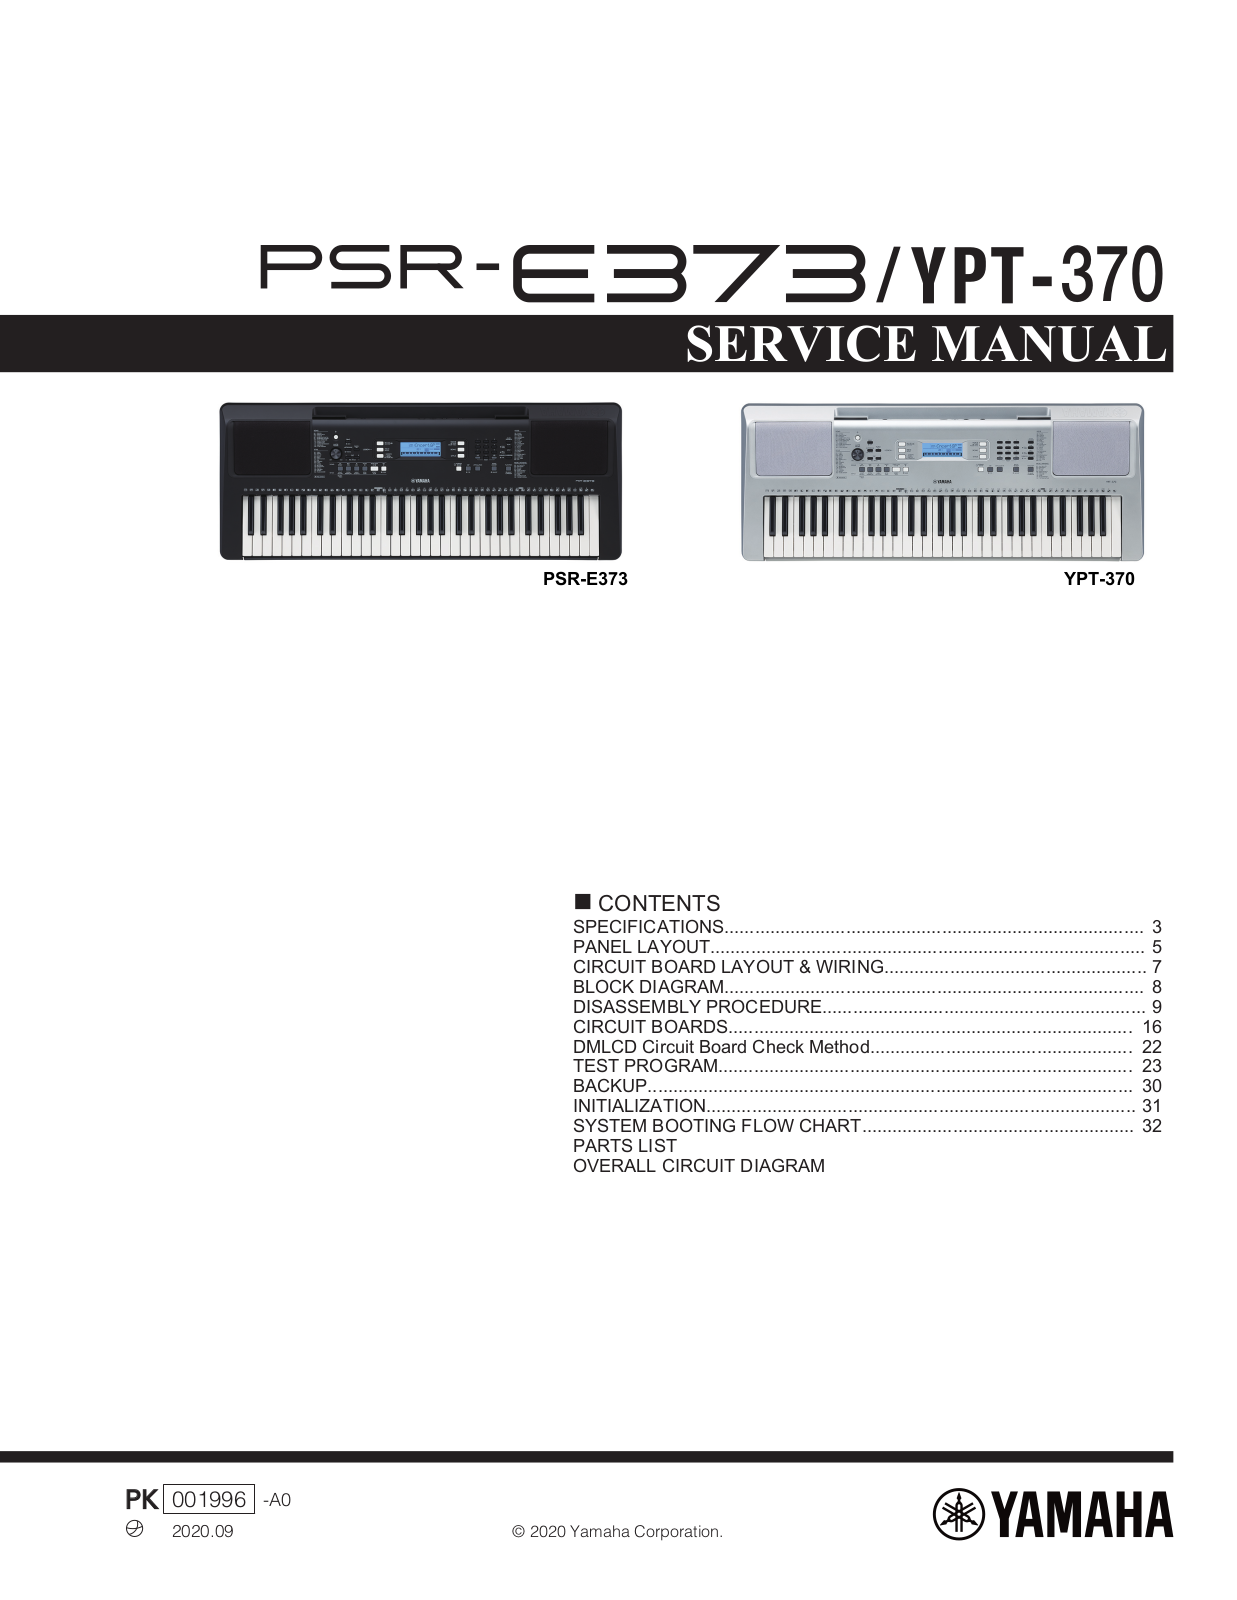 Yamaha PSR-E373 Service Manual